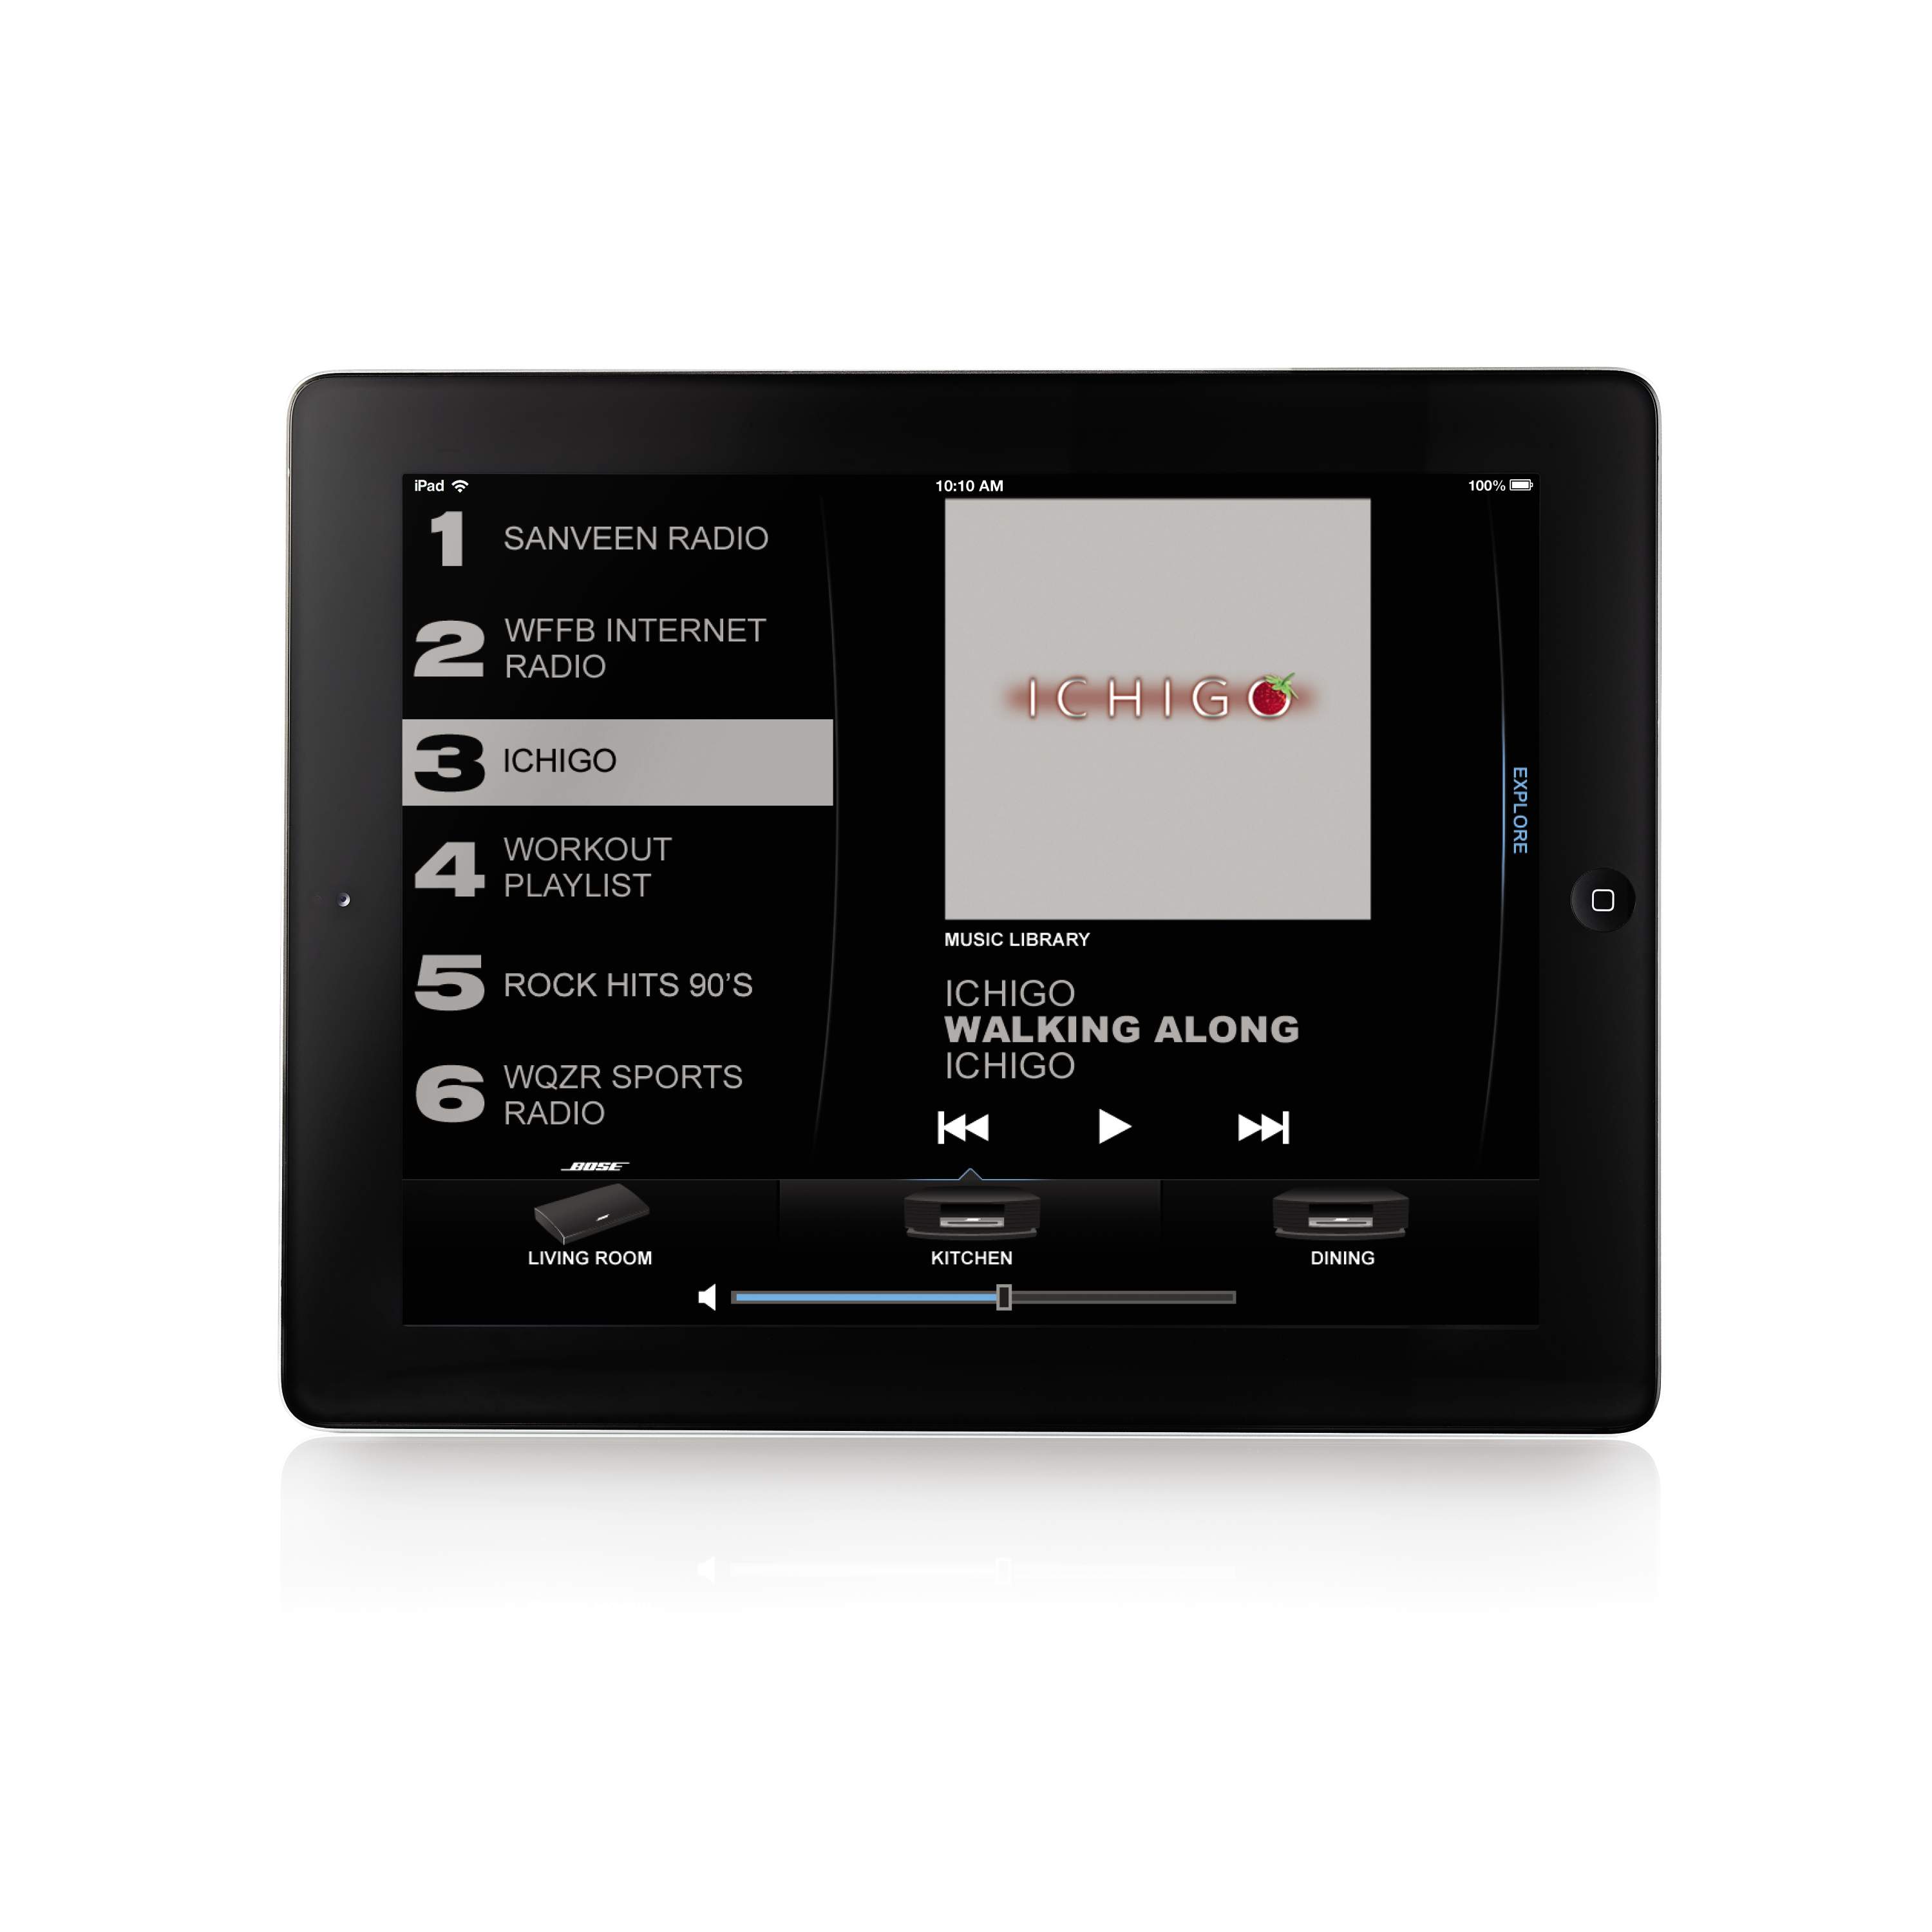 Bose soundtouch desktop app